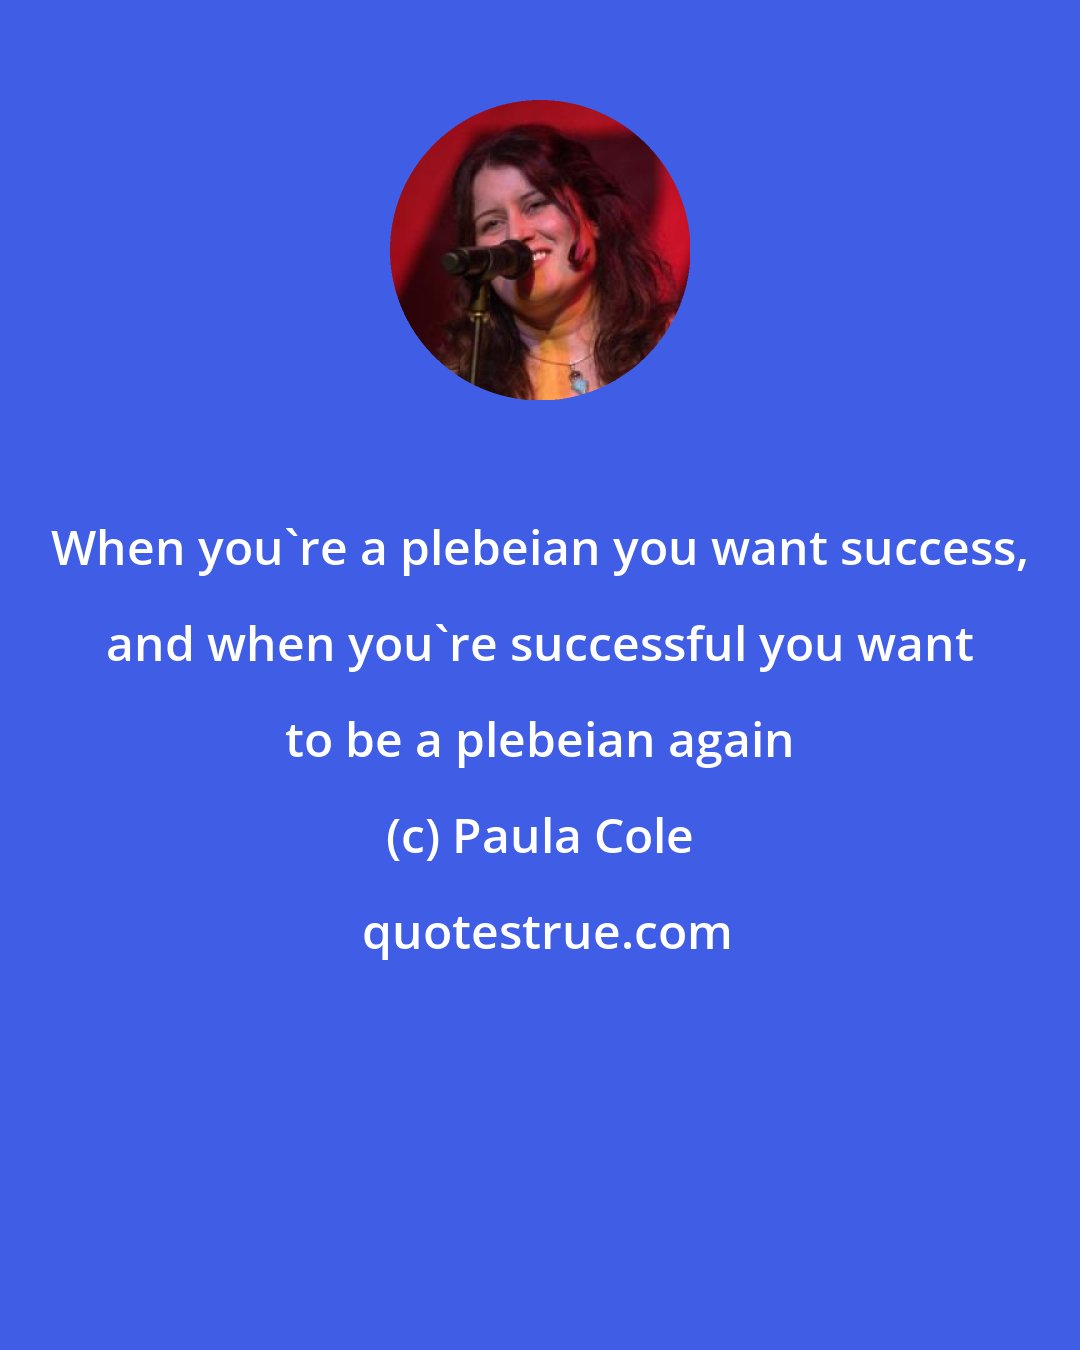 Paula Cole: When you're a plebeian you want success, and when you're successful you want to be a plebeian again